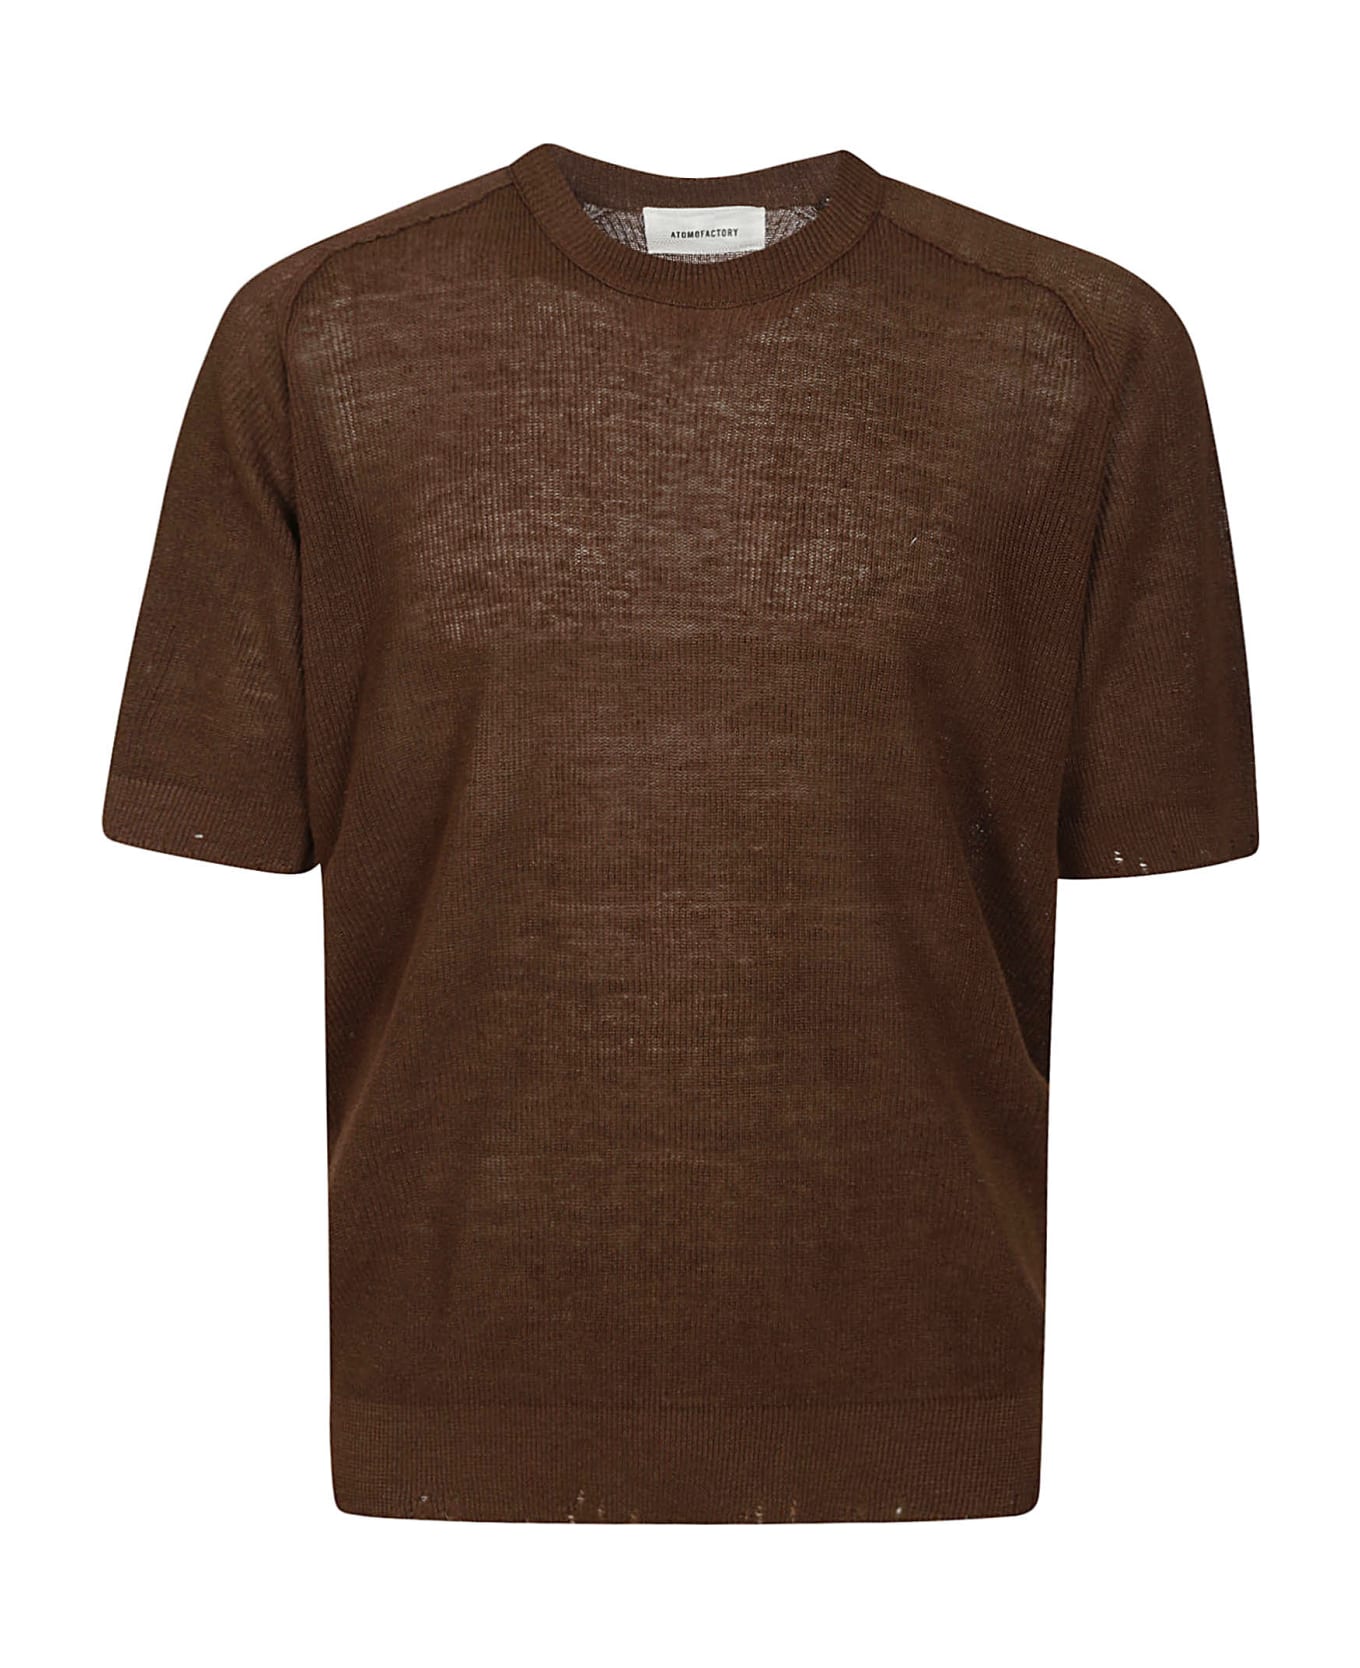 Atomo Factory T-shirt P Pannocchia - Brown